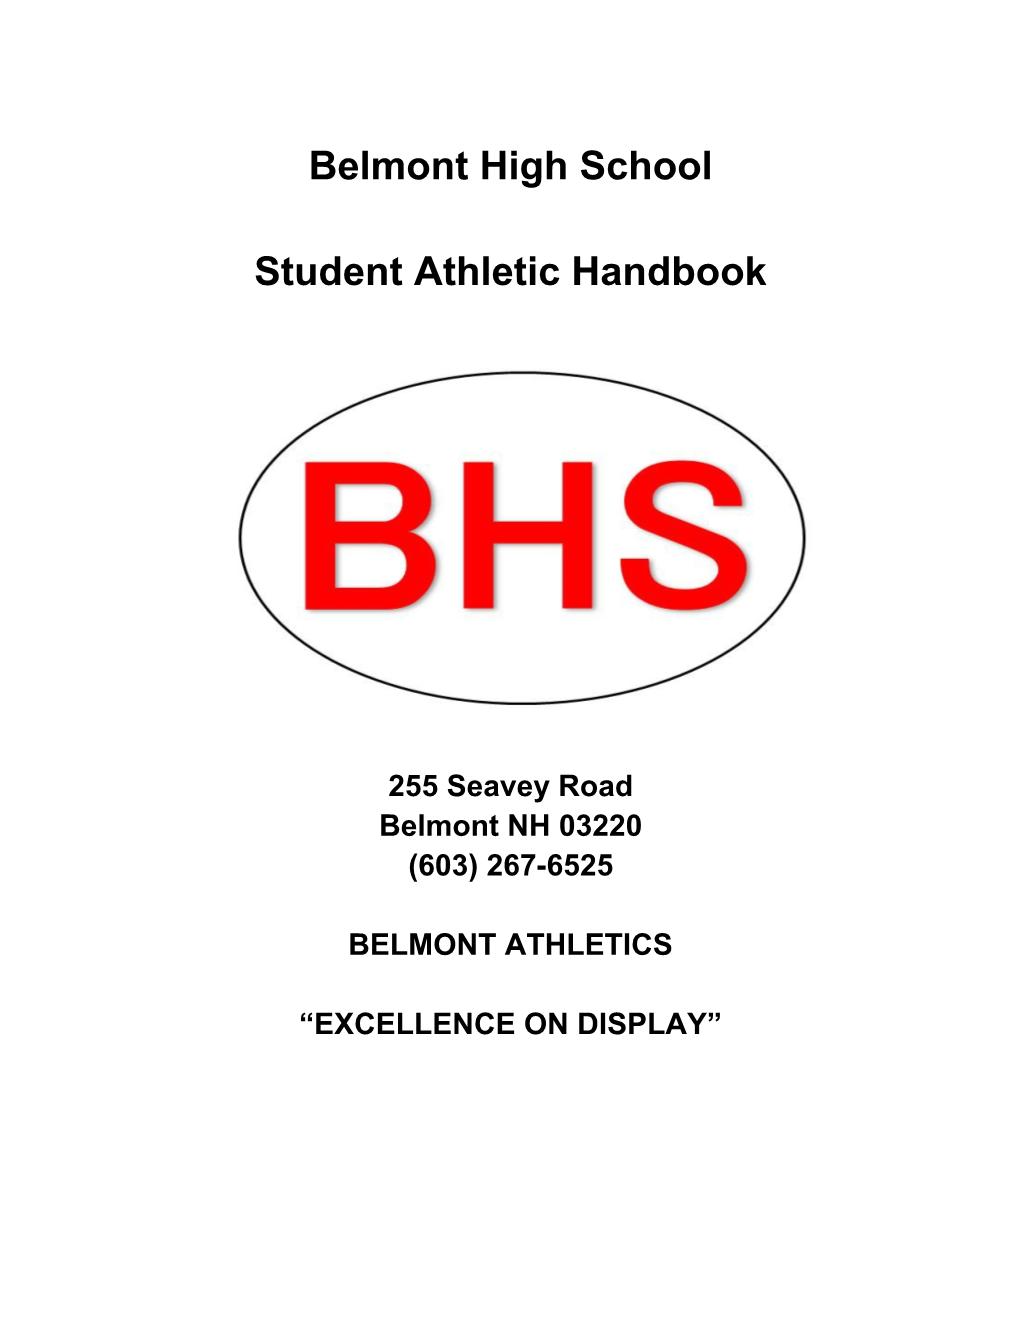 BHS Student Athletics Handbook